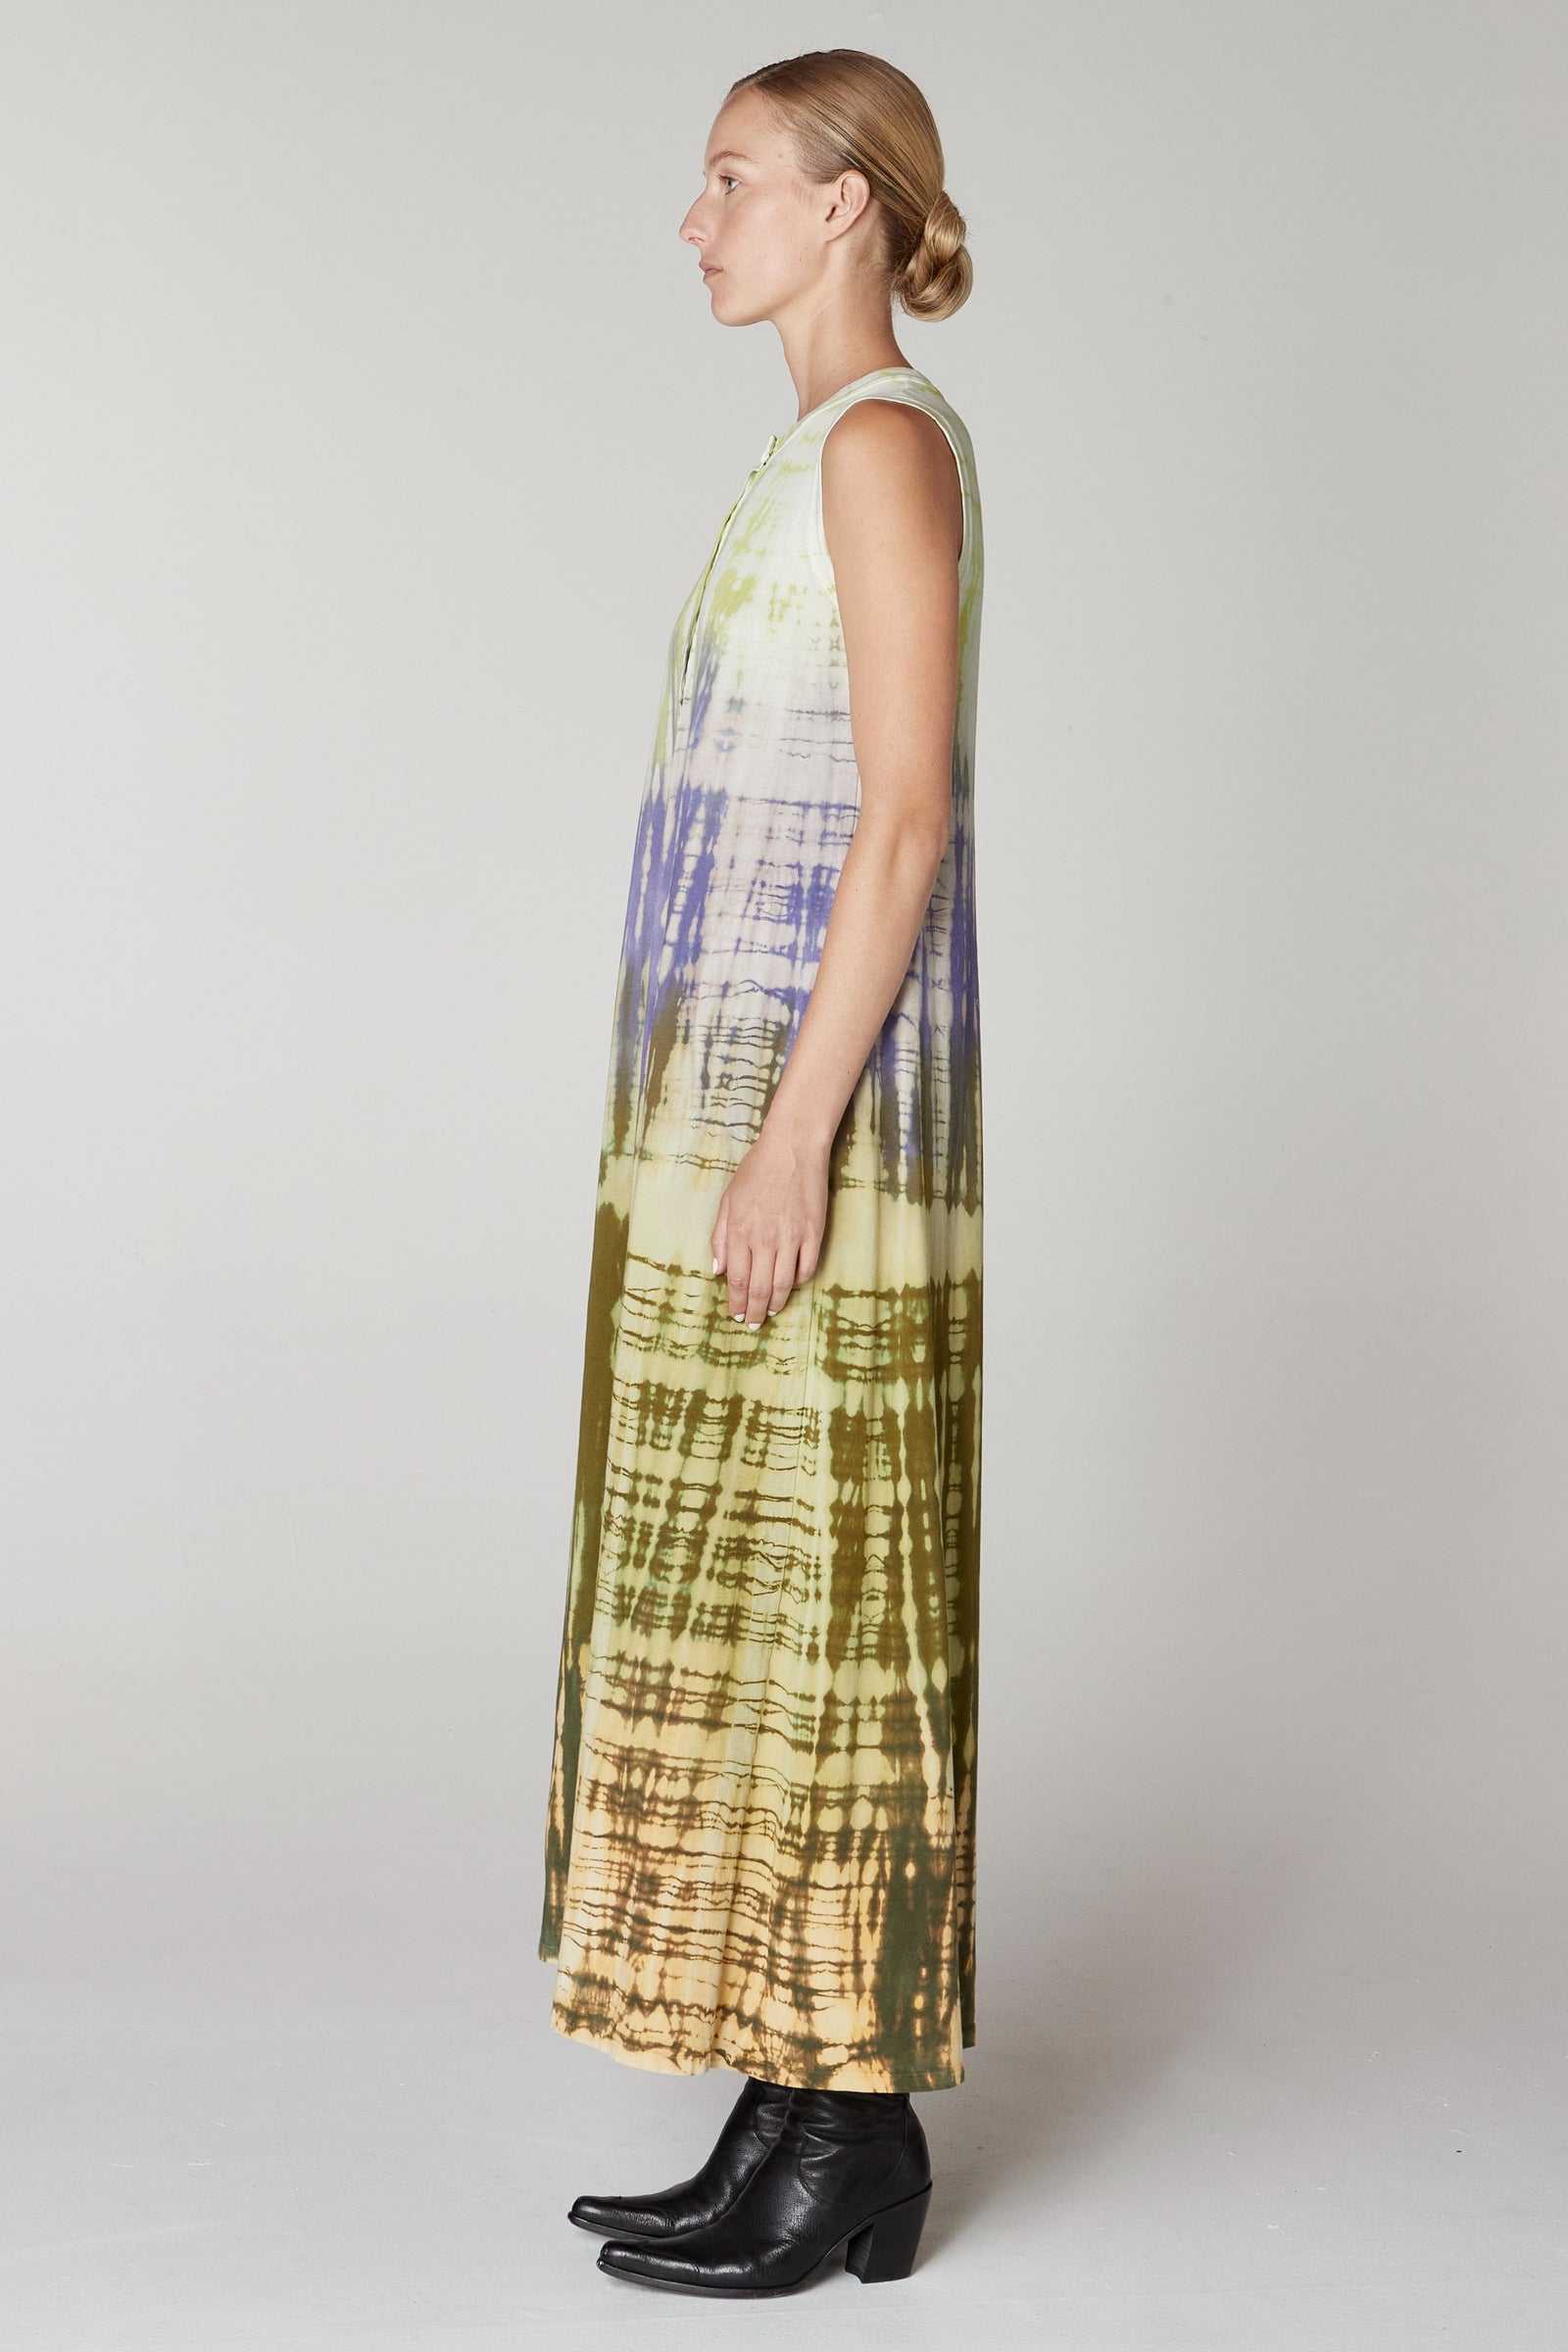 Moss/Lavender Tr Sleevess Christy Dress